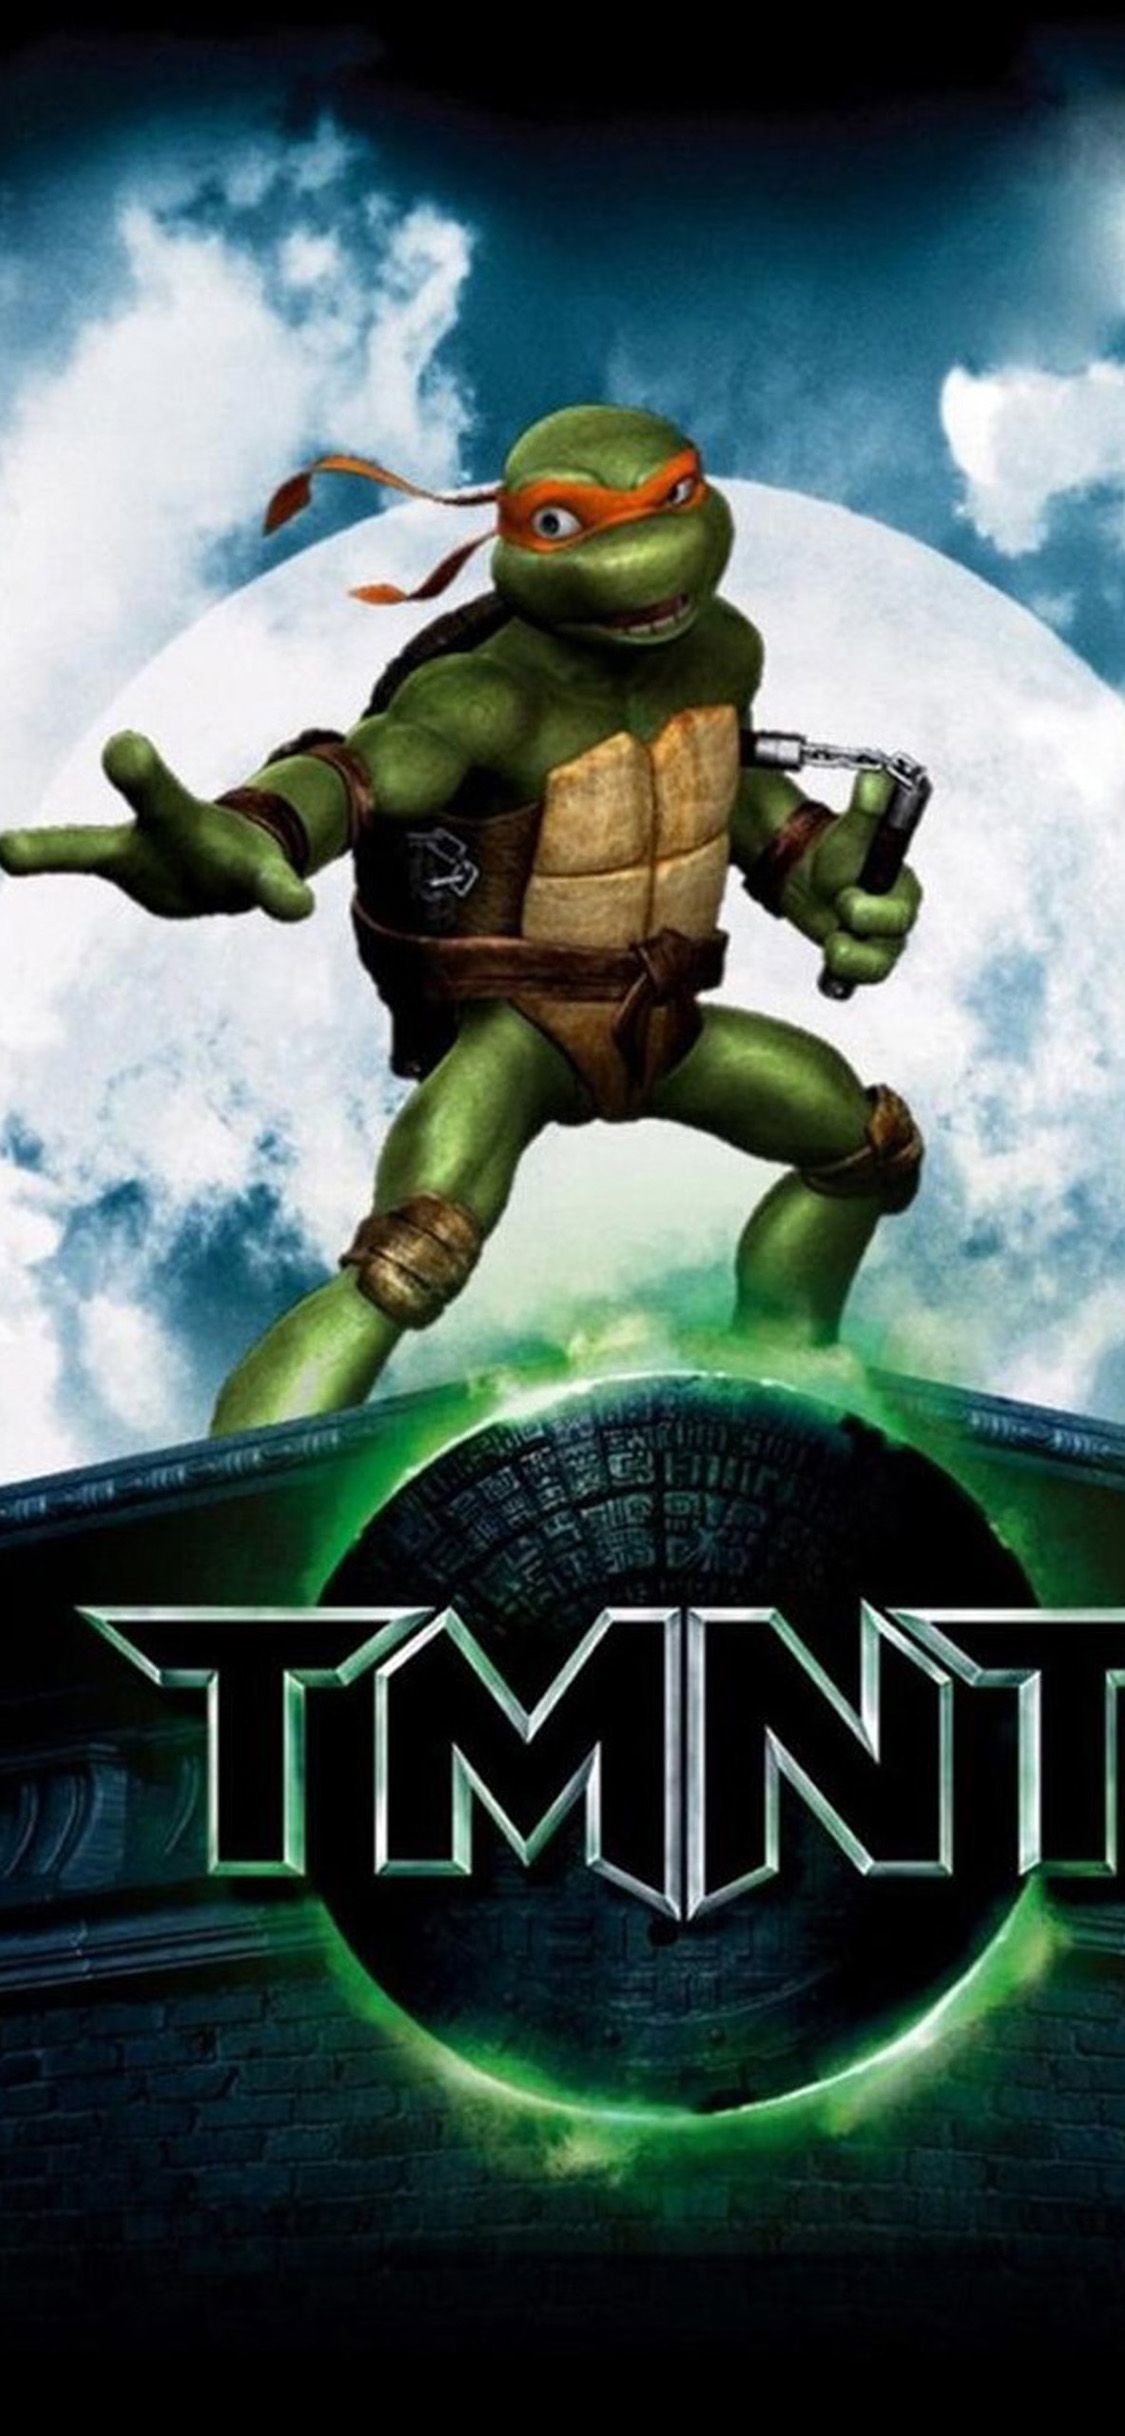 1125x2436 1080x1920 Download Raphael - Teenage Mutant Ninja Turtles 1080 x 1920 ...">